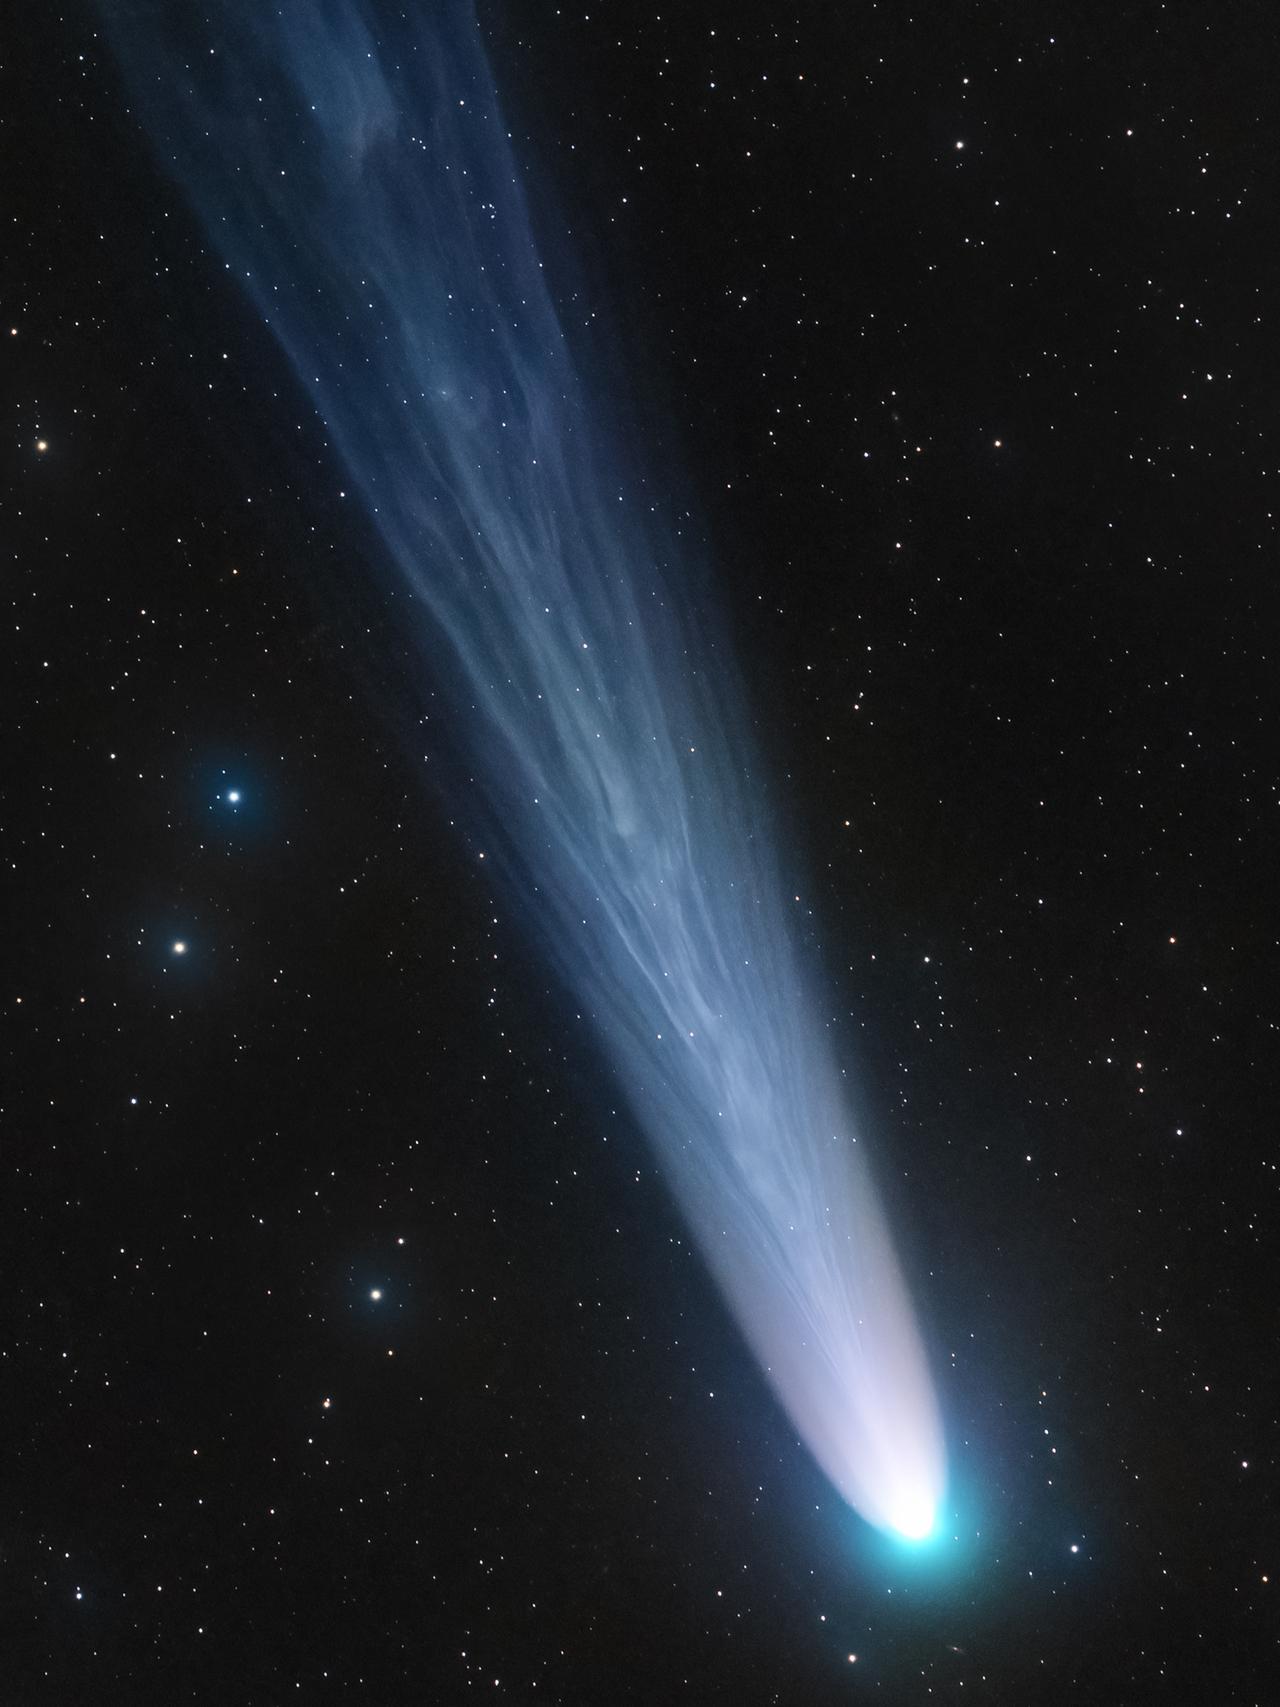 An image showing 'Comet C/2021 A1 (Leonard)'